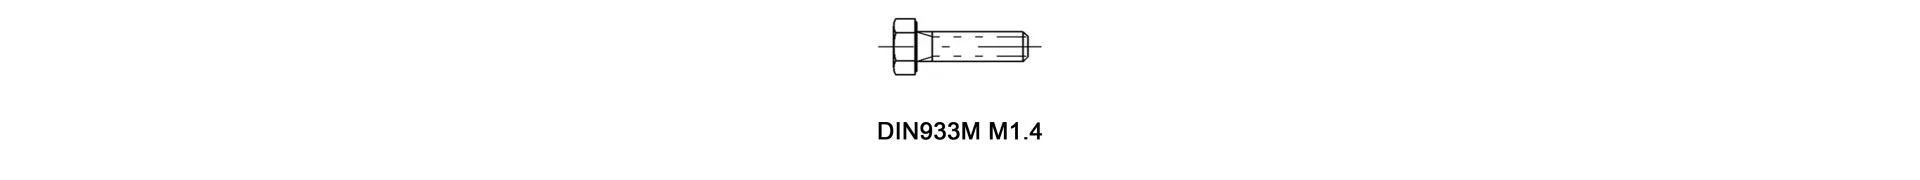 DIN933M M1.4